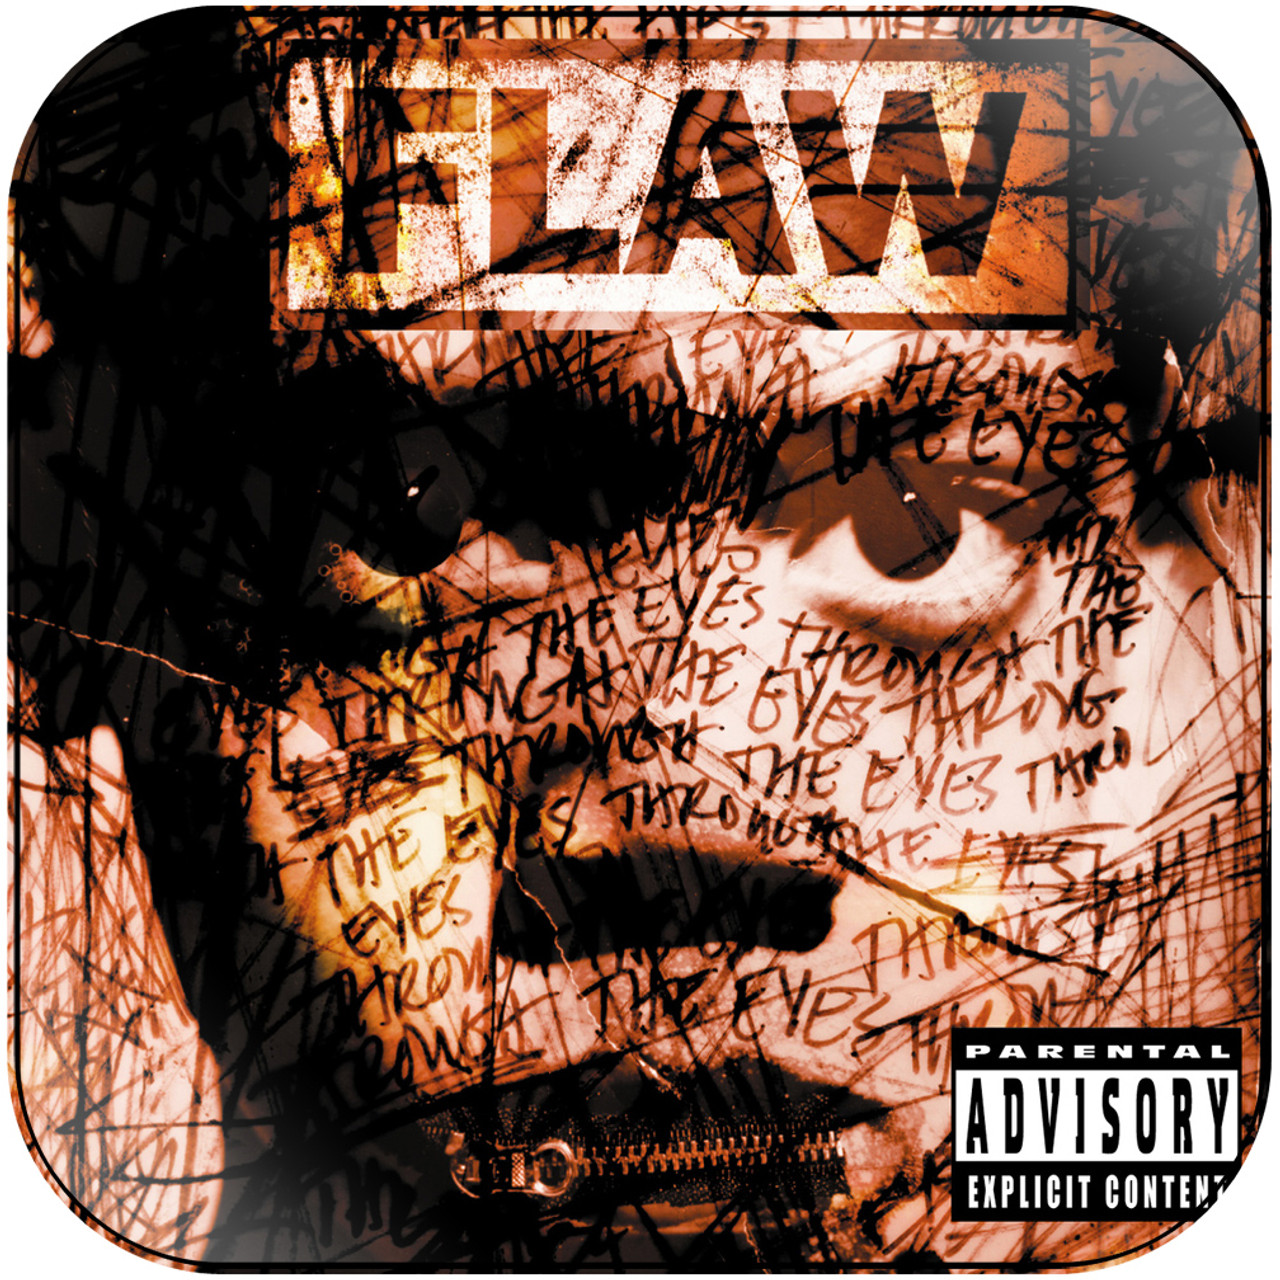 Flaw - Through The Eyes Album Cover Sticker